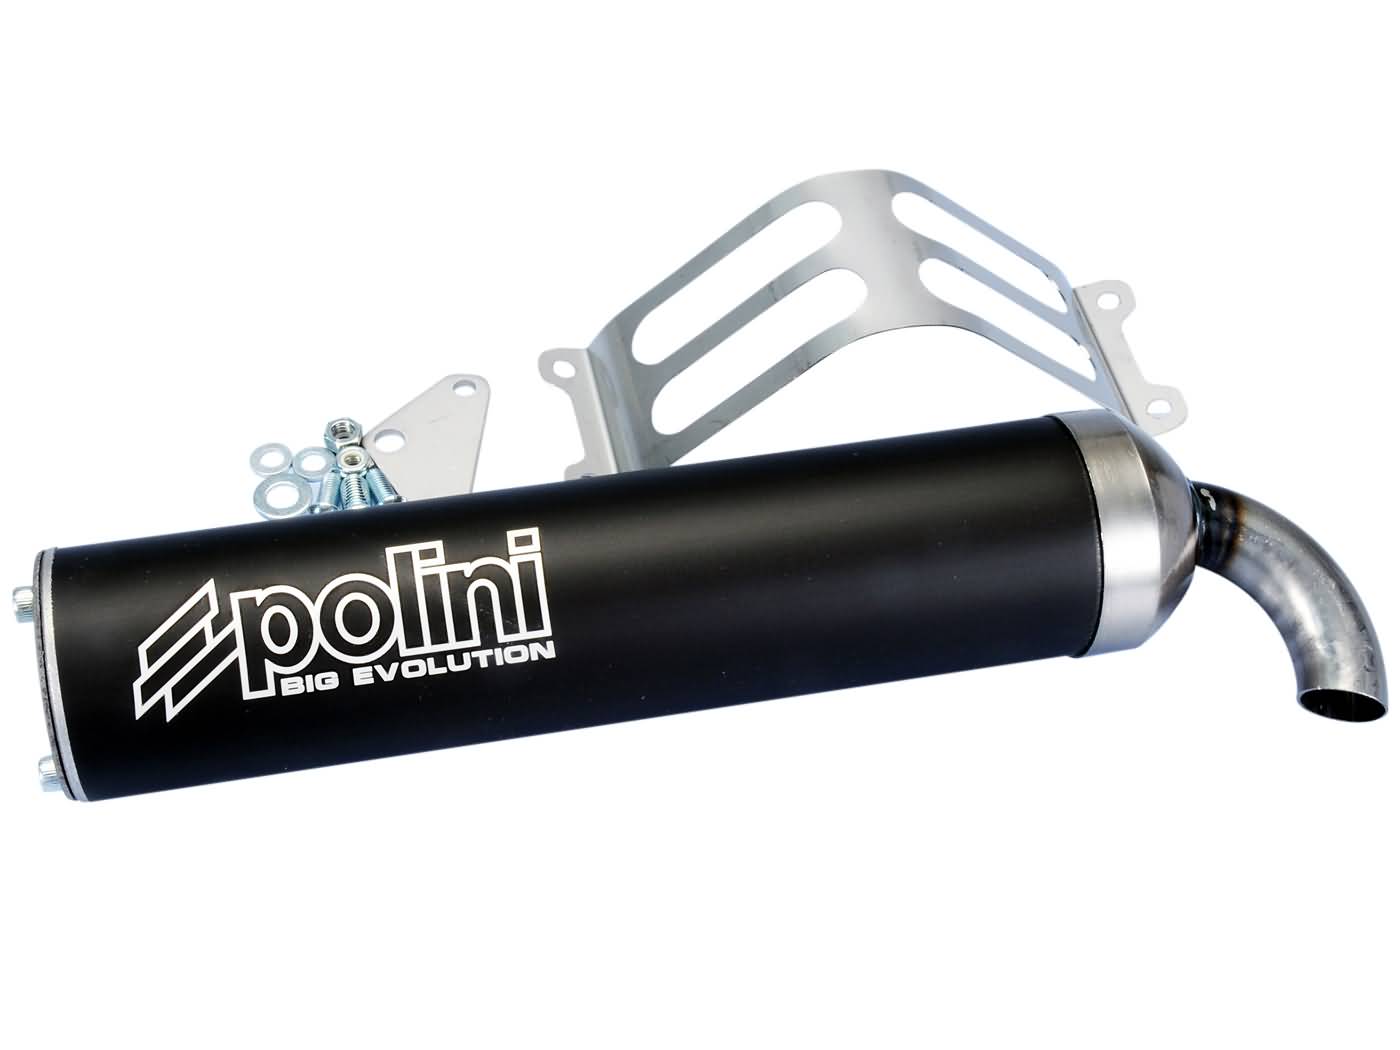 POLINI 200.0301 - Marmitta Big Evolution 70 ccm Limited Edition 2013 -  Piaggio